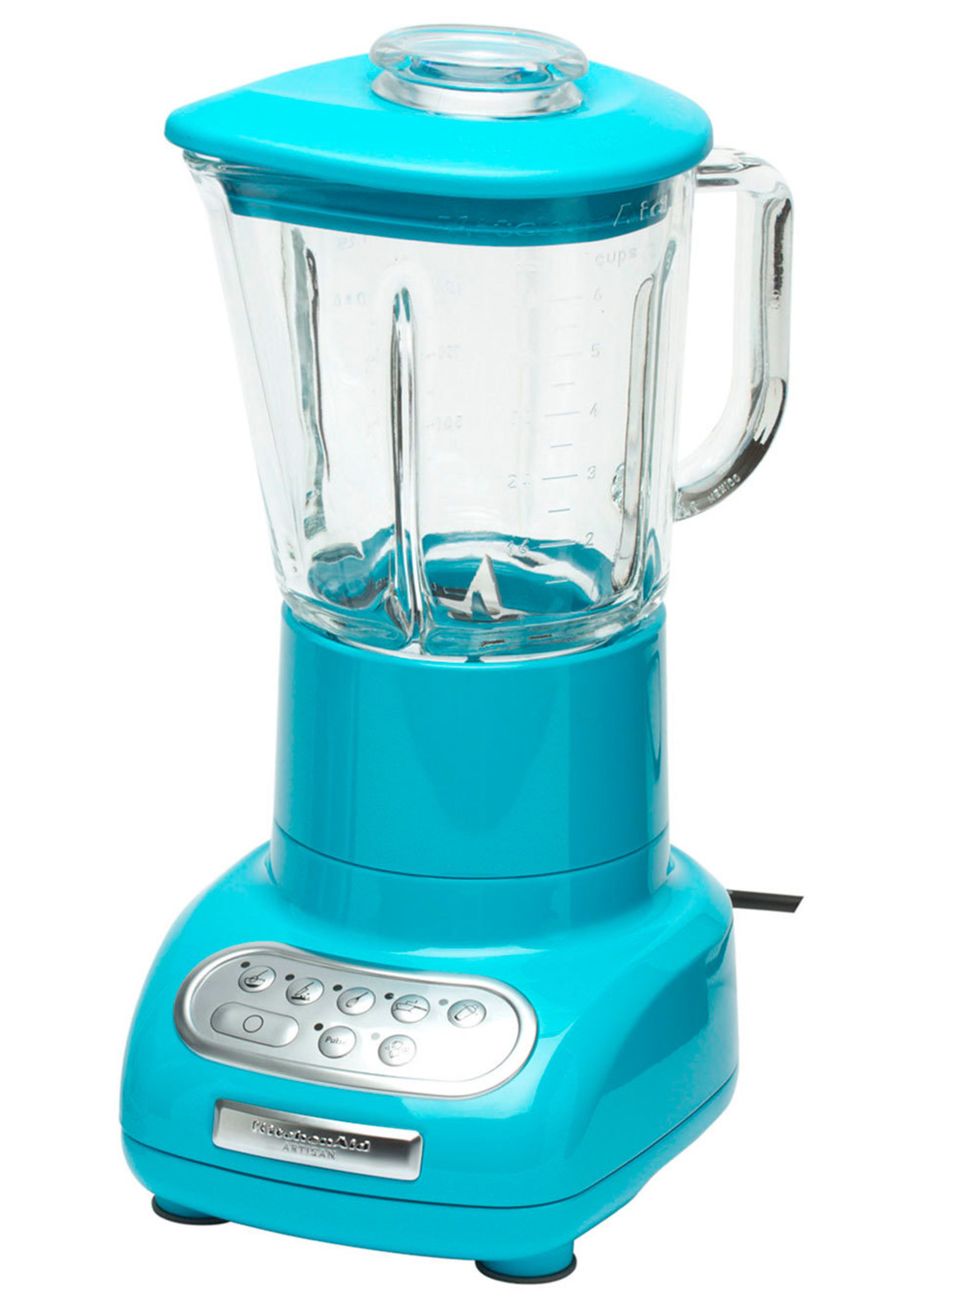 Blue, Aqua, Liquid, Glass, Teal, Turquoise, Scale, Small appliance, Kitchen appliance, Machine, 